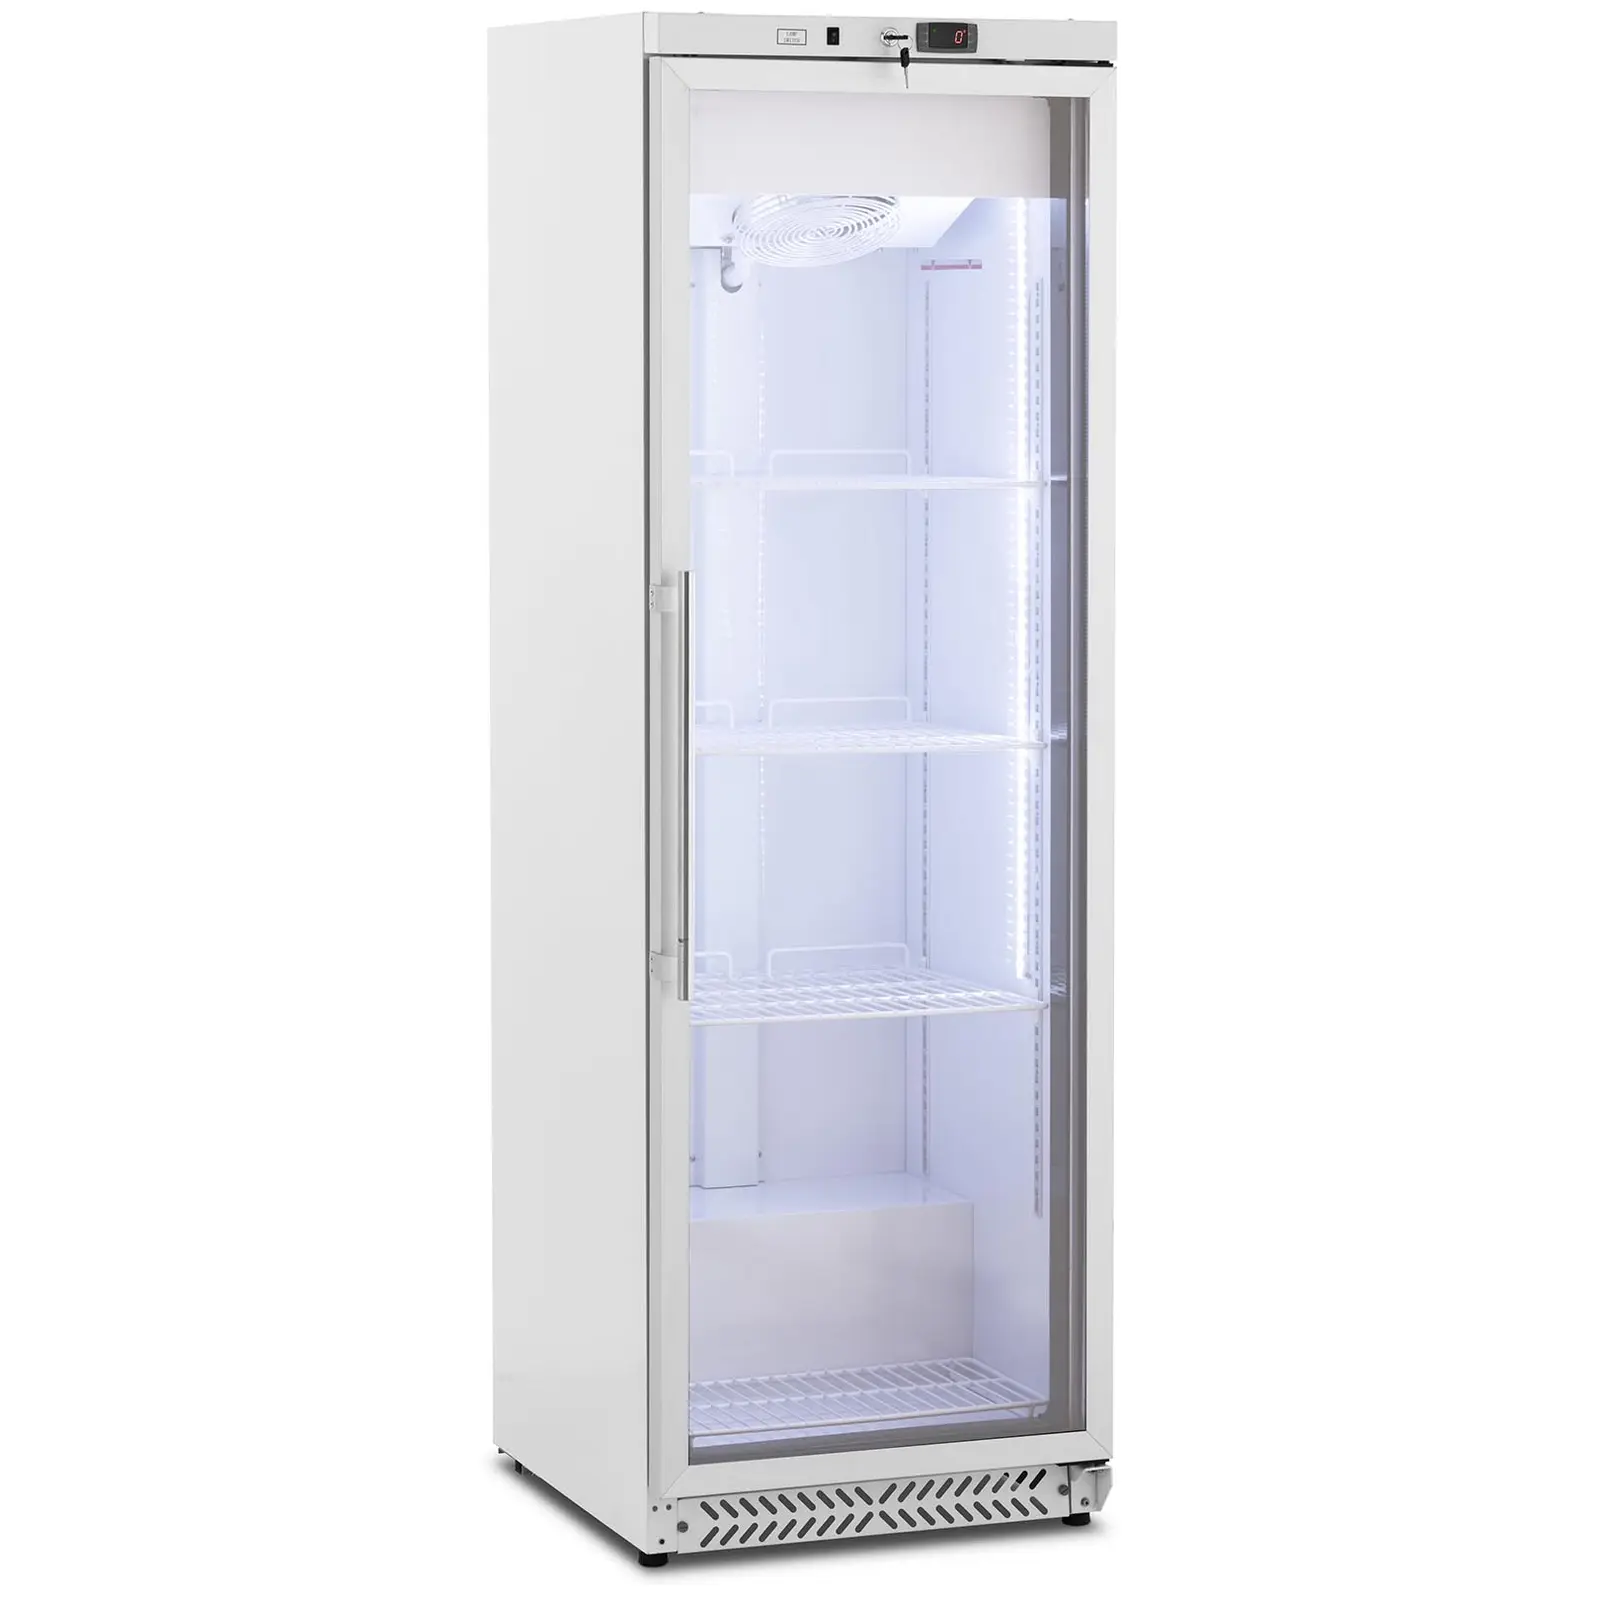 Gastro-Kühlschrank - 380 L - Royal Catering - mit Glastür